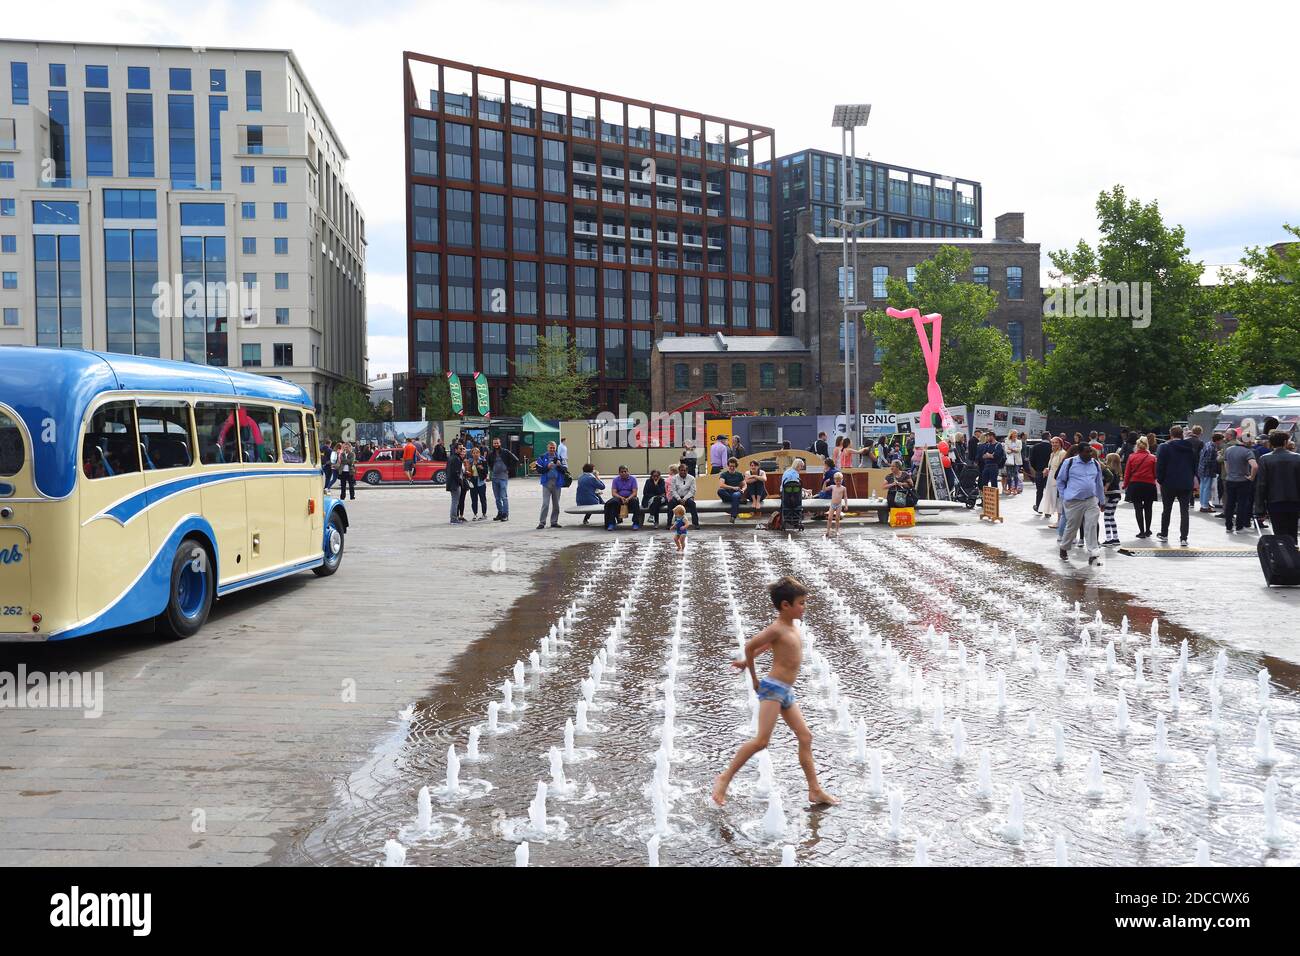 Großbritannien / England /London / Granary Square Fountains at King's Cross London. Kinder in Sprinklern am Granary Square Wasserspiel in Kings Cross. Stockfoto